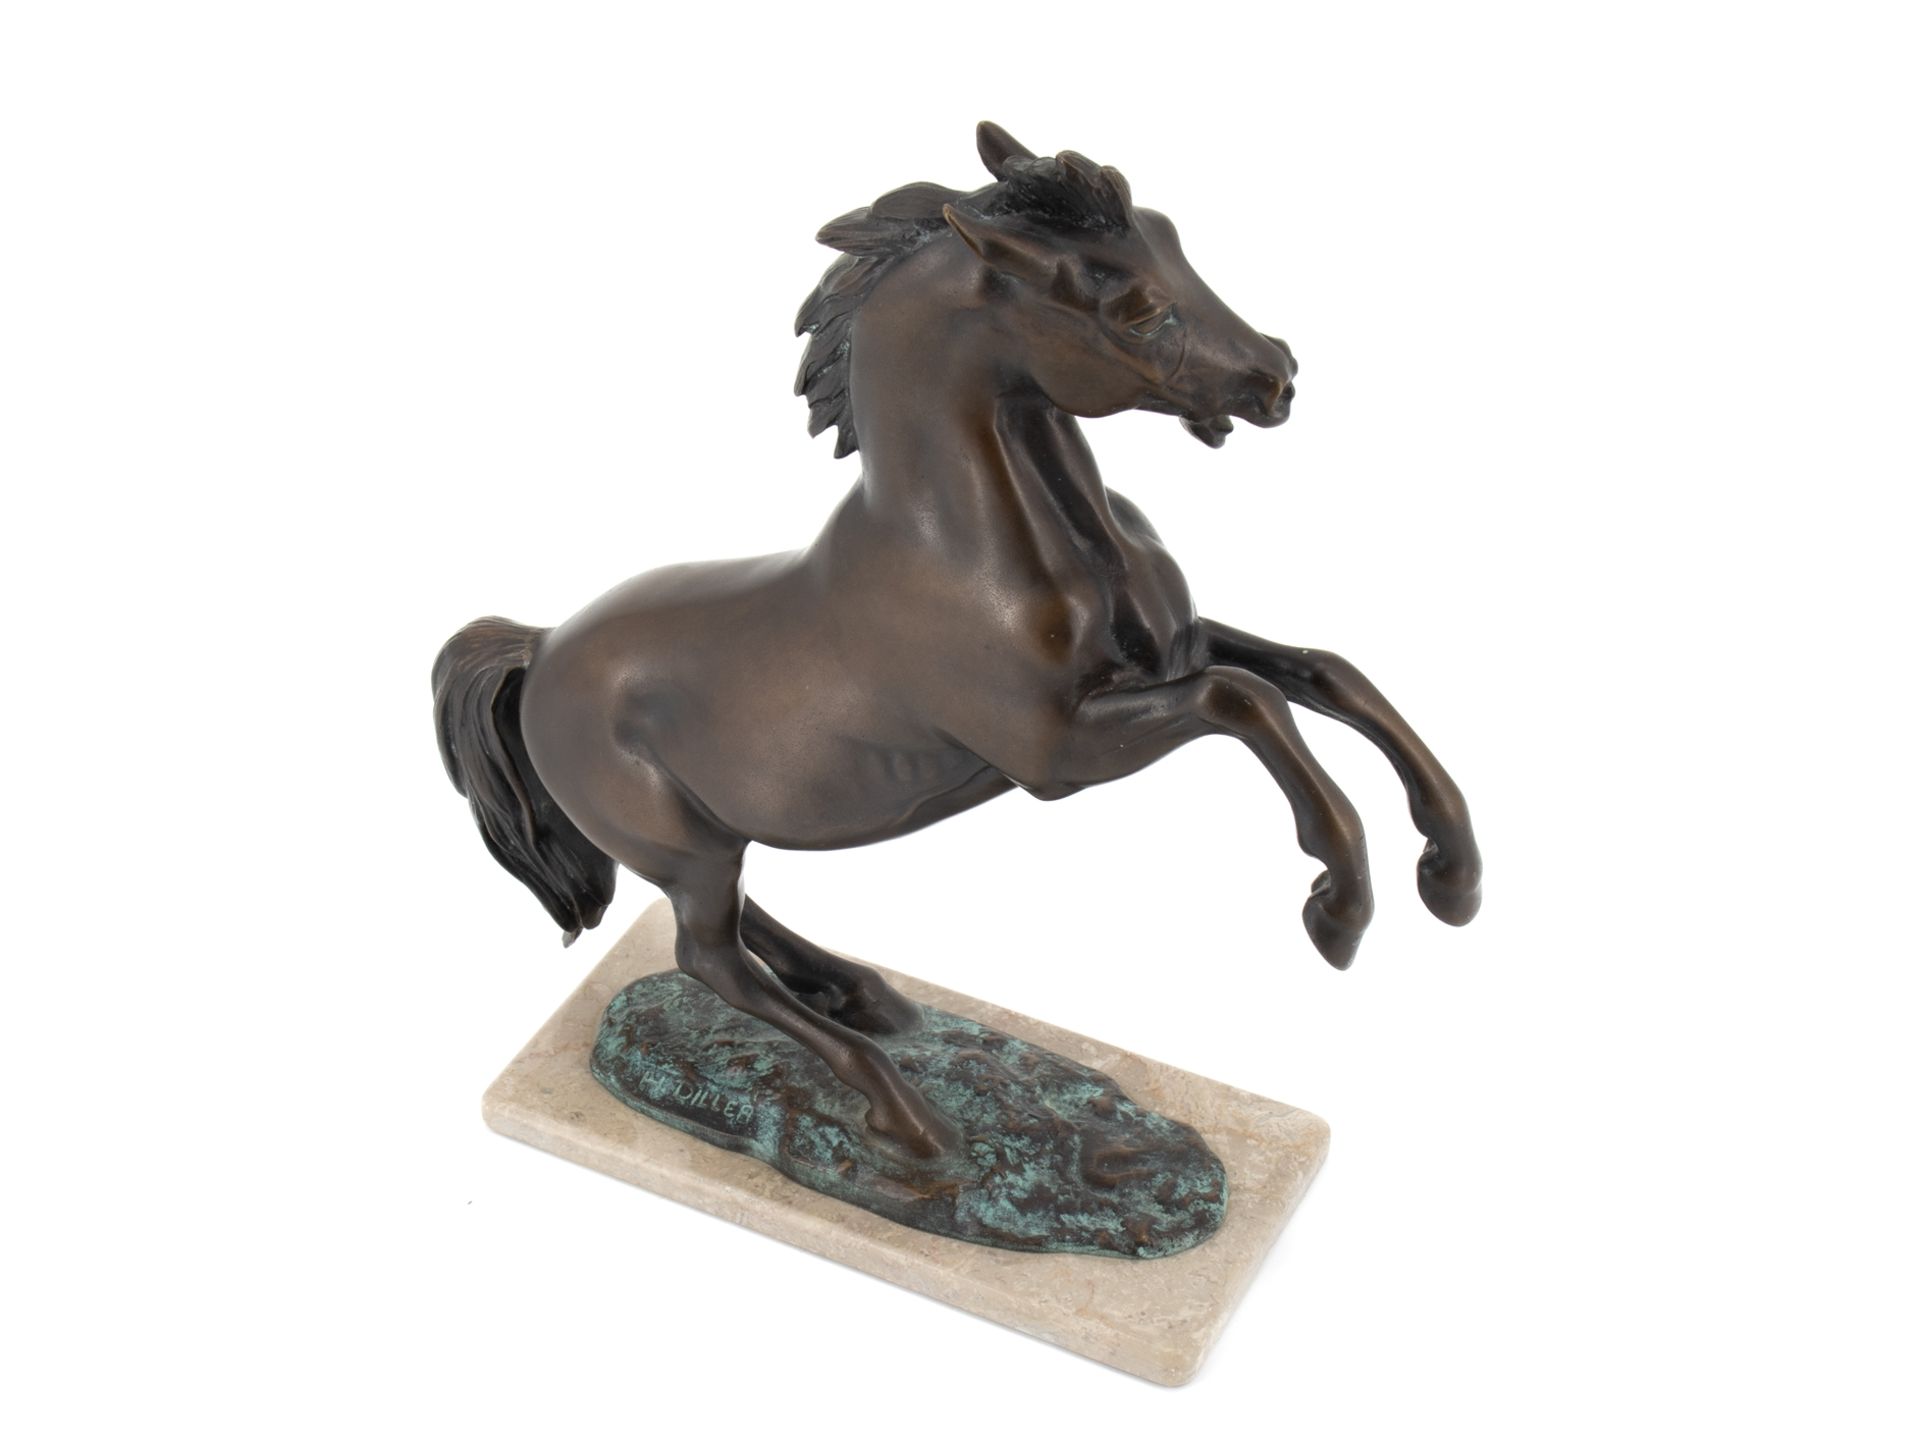 Diller Helmut (1911 - 1984), Bronze sculpture "Steigendes Pferd" (Rising Horse) - Image 7 of 9